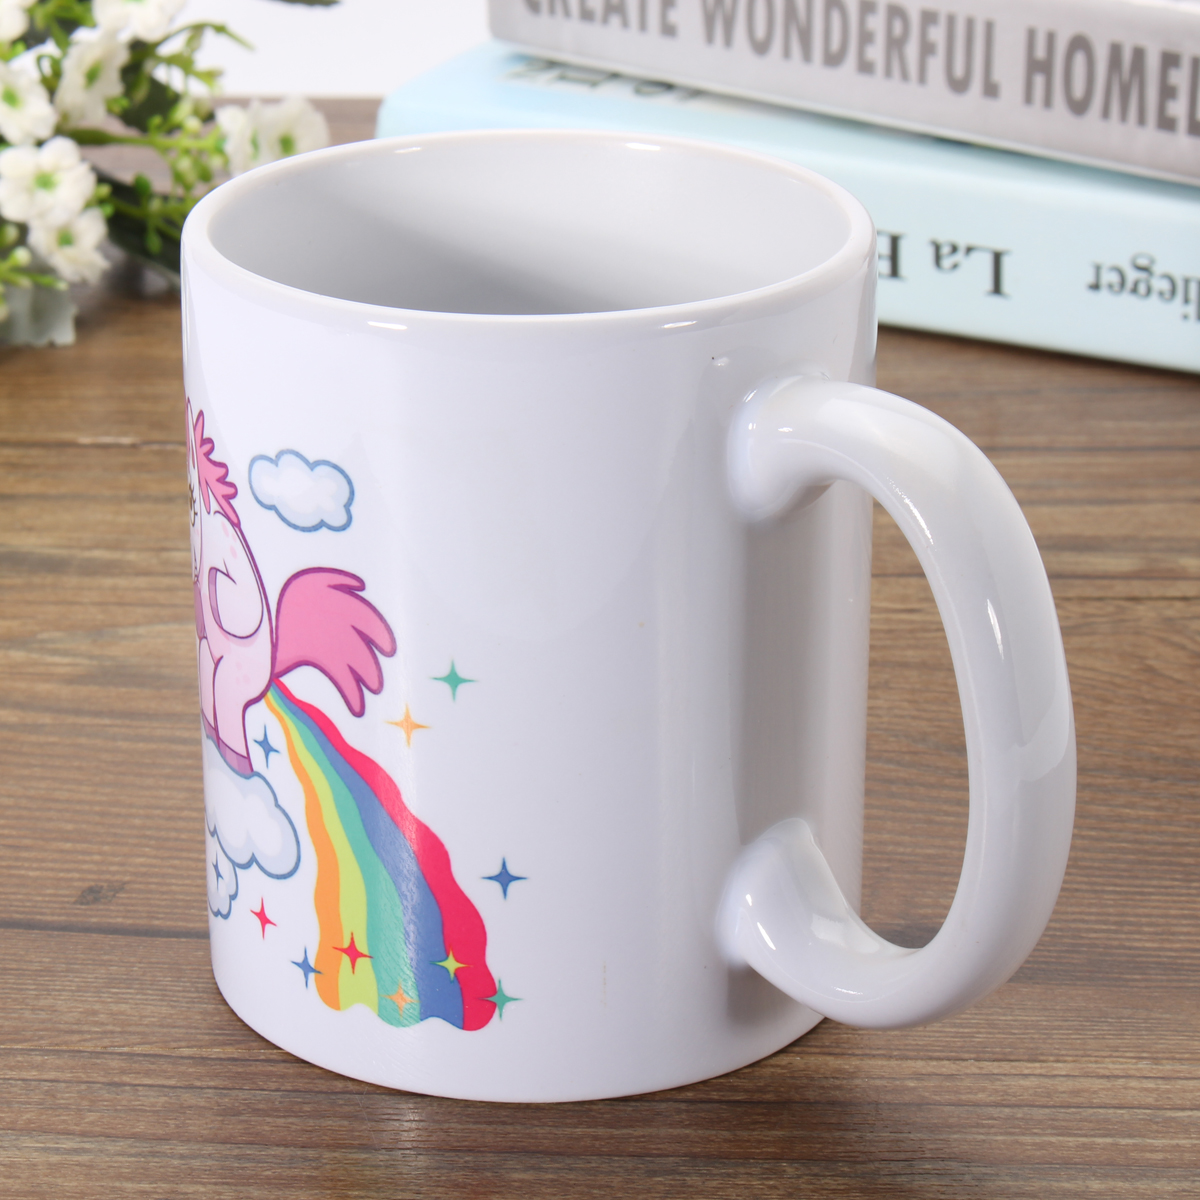 Funny-Rainbow-Unicorn-Ceramic-Mug-Coffee-Milk-Tea-Cup-Home-Office-Christmas-Kids-Gift-1234164